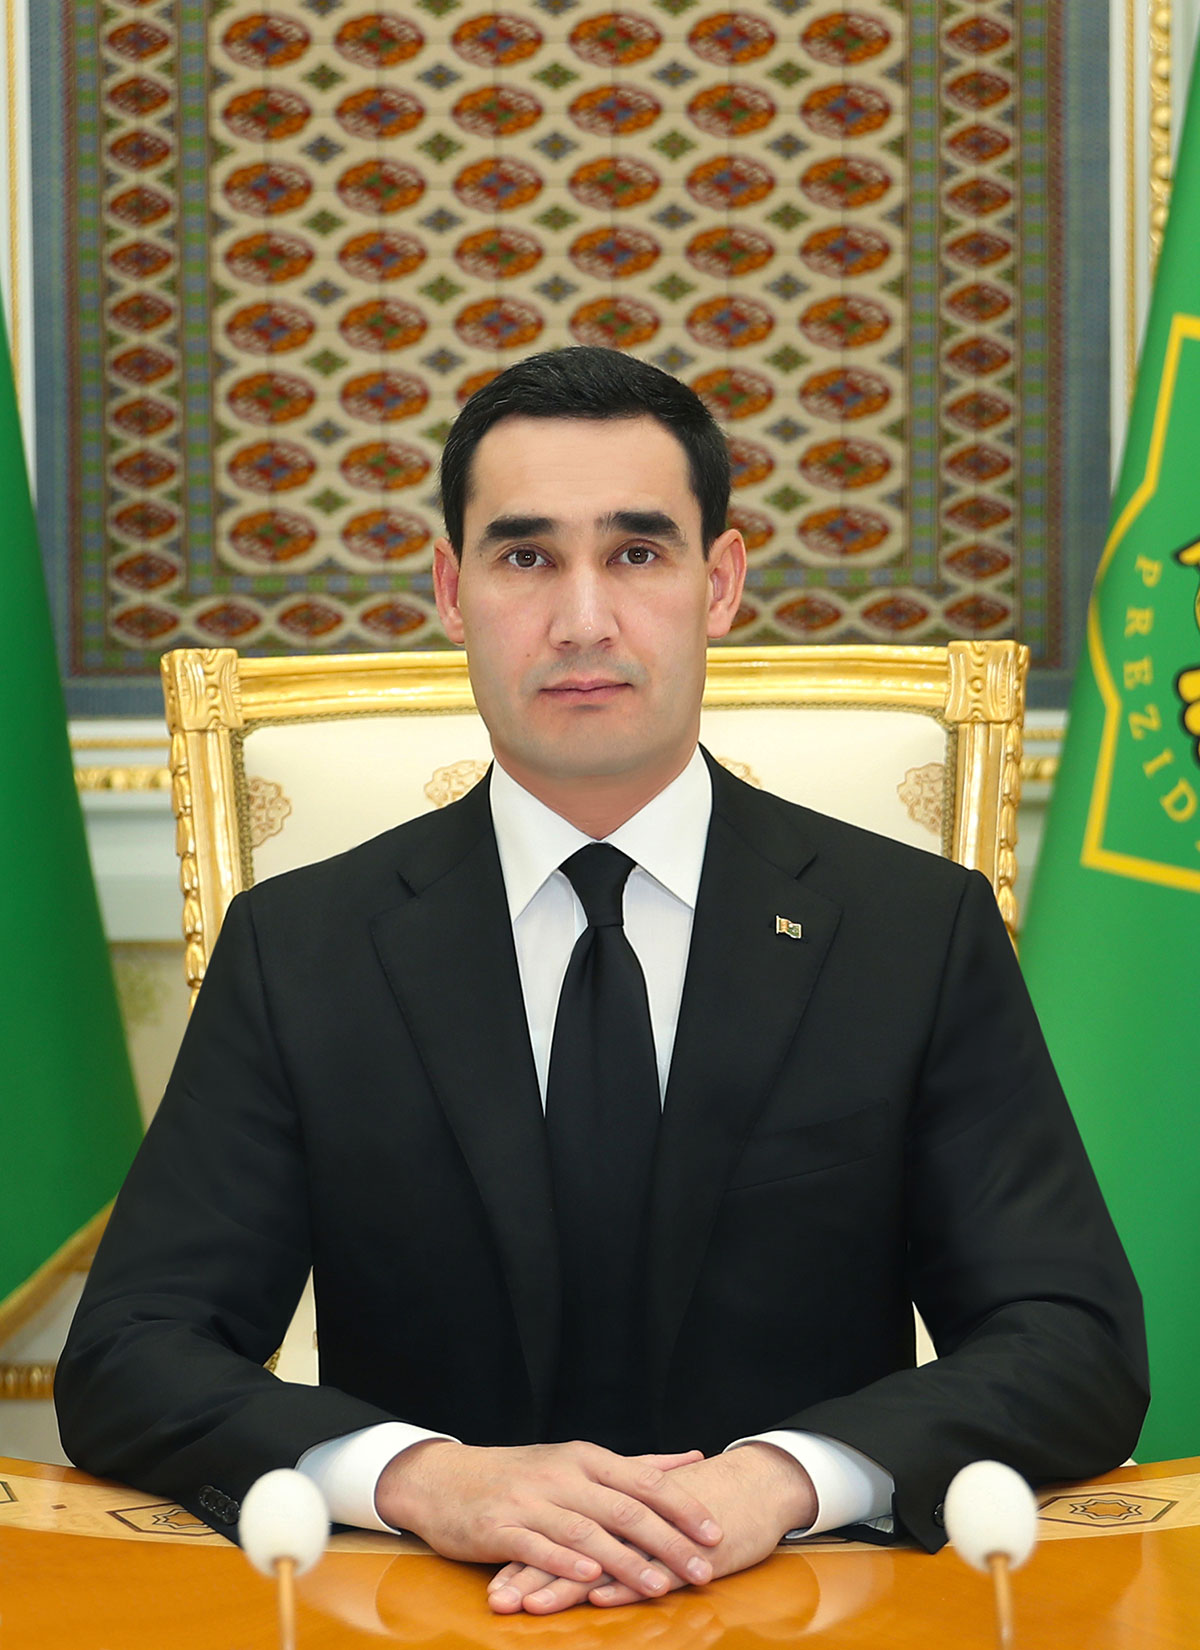 Adamlar baradaky alada — Türkmenistanyň döwlet syýasatynyň wajyp ugry